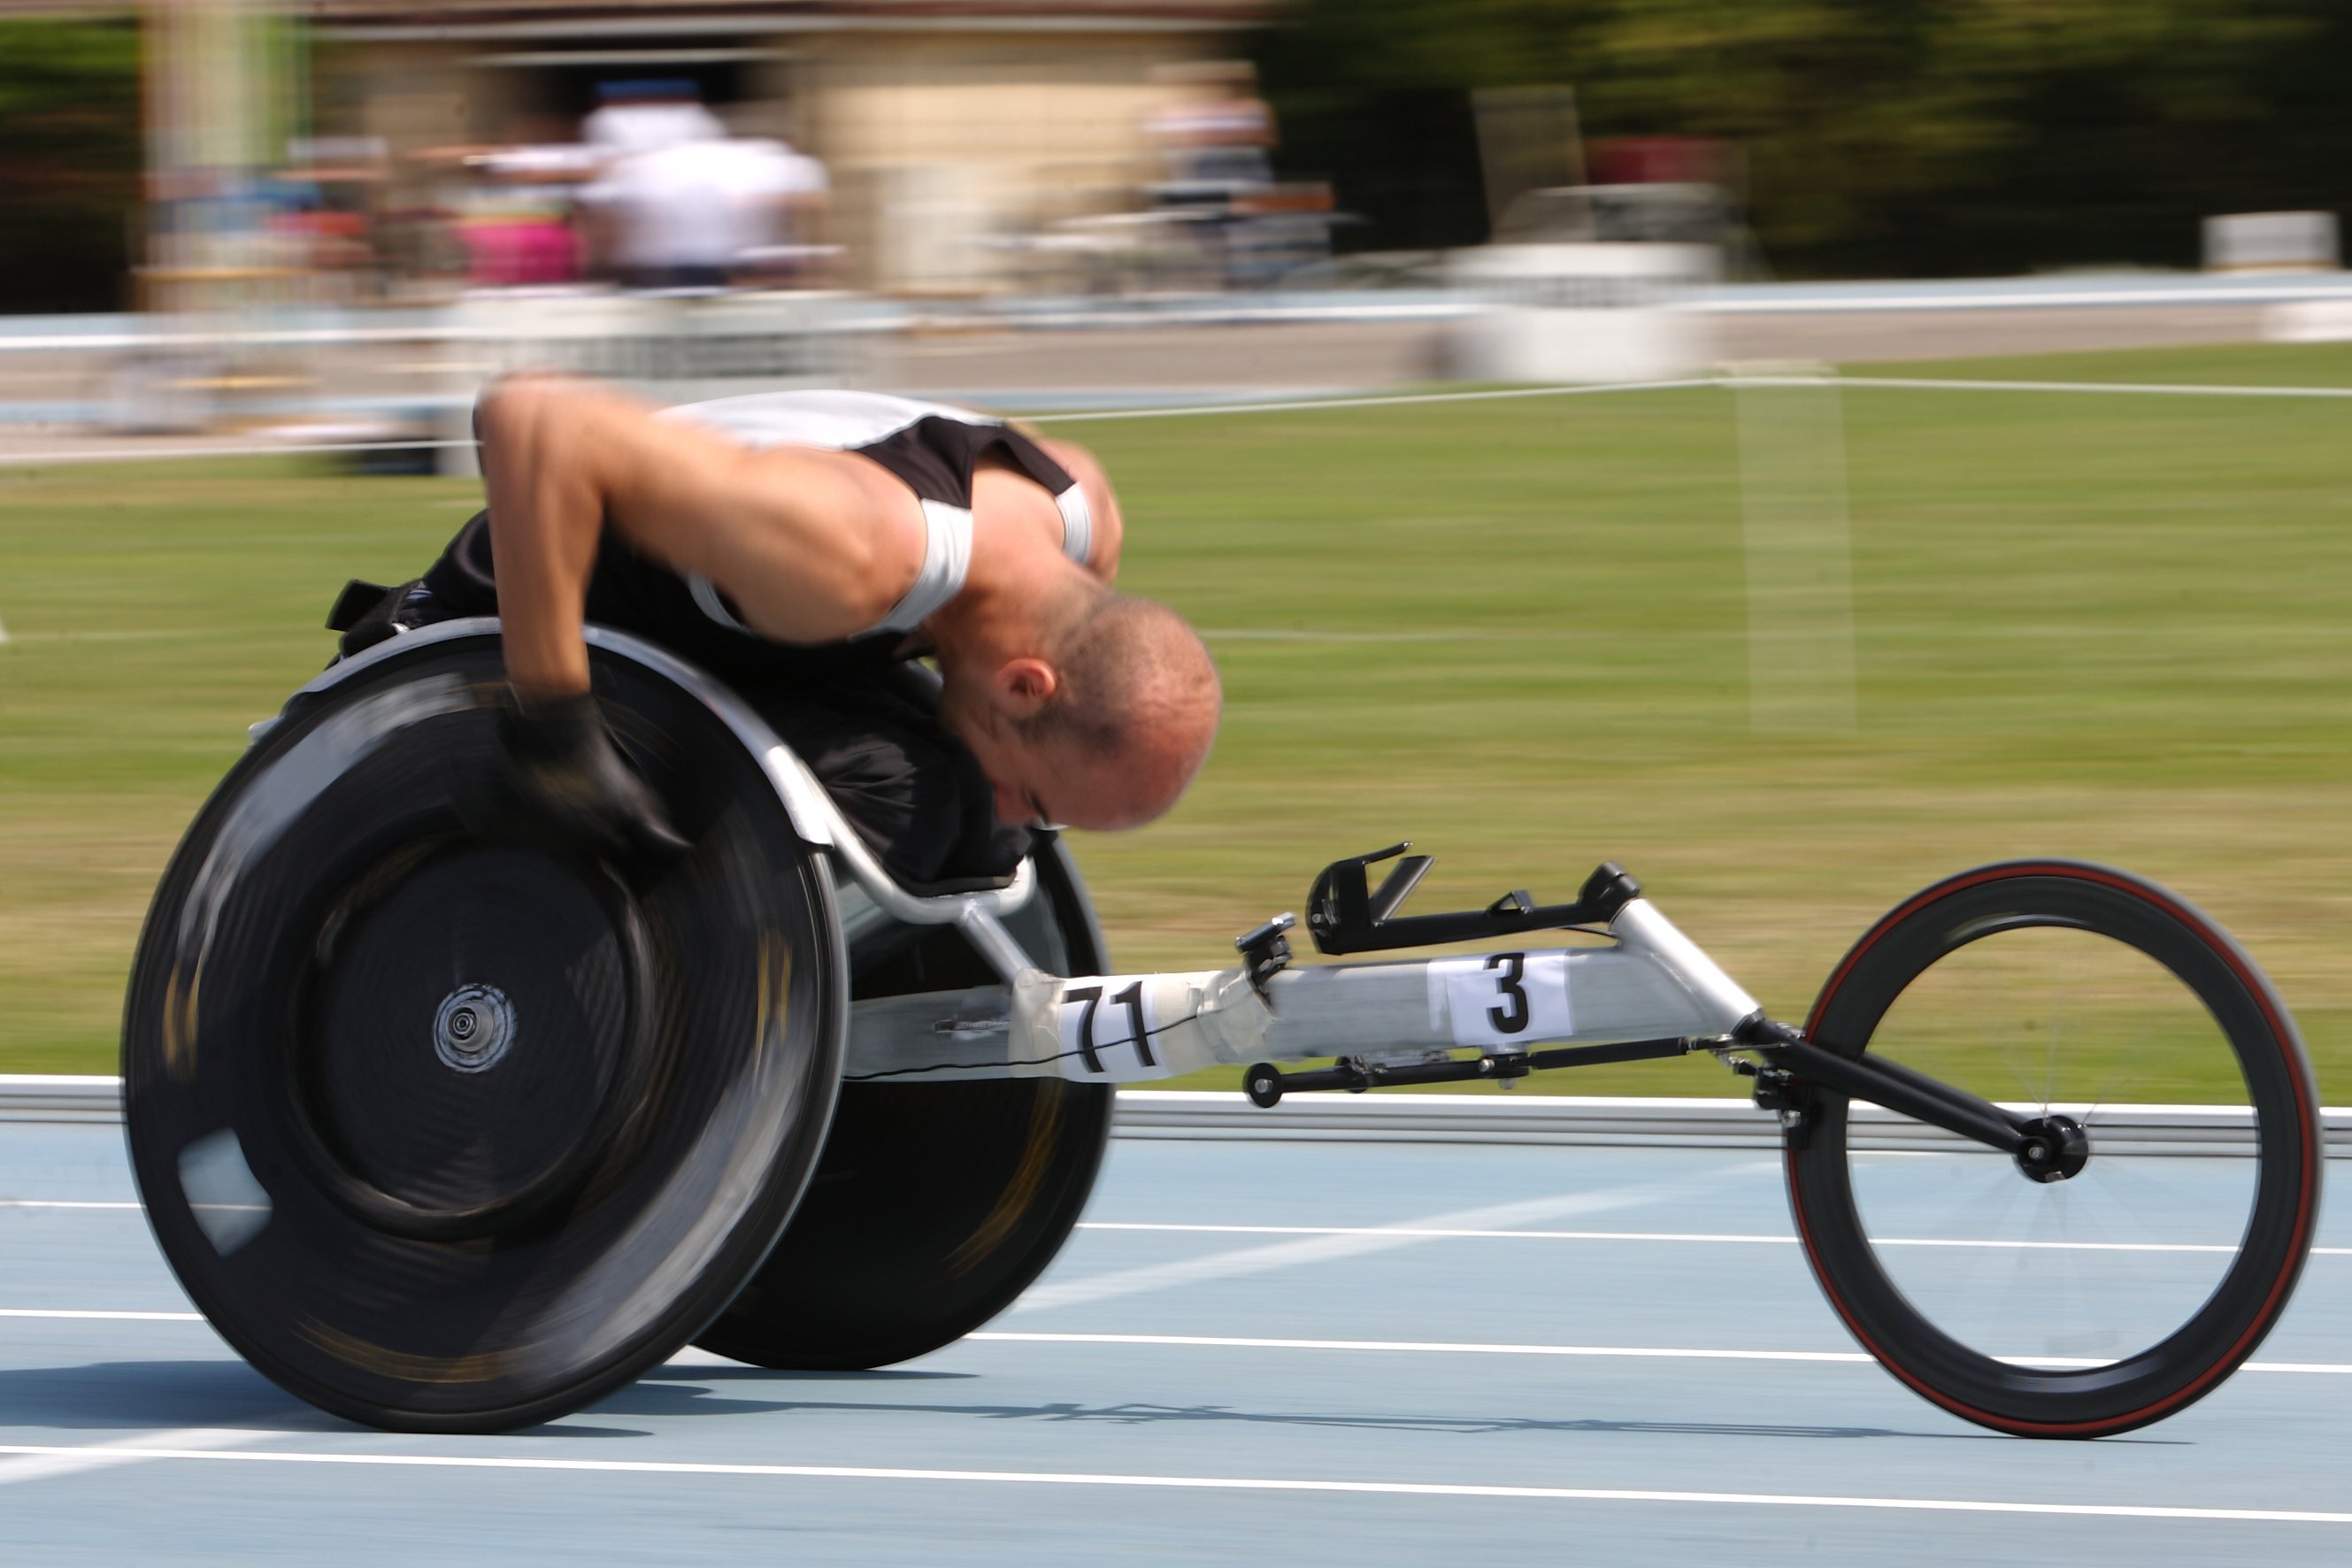 Racing wheelchairs and training